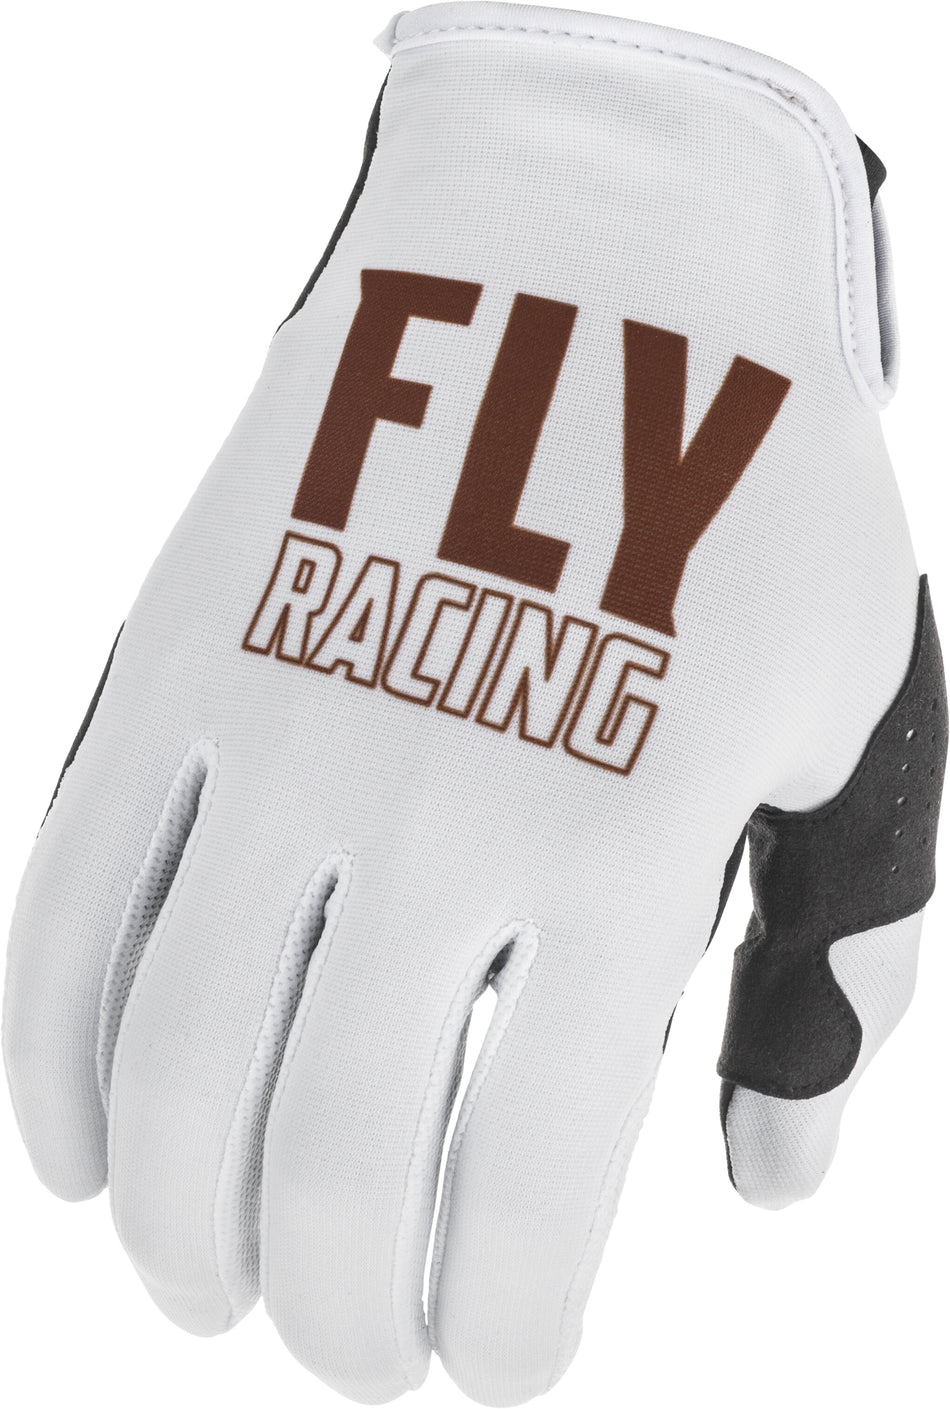 FLY RACING Lite L.E. Gloves White/Copper Sz 09 374-71909